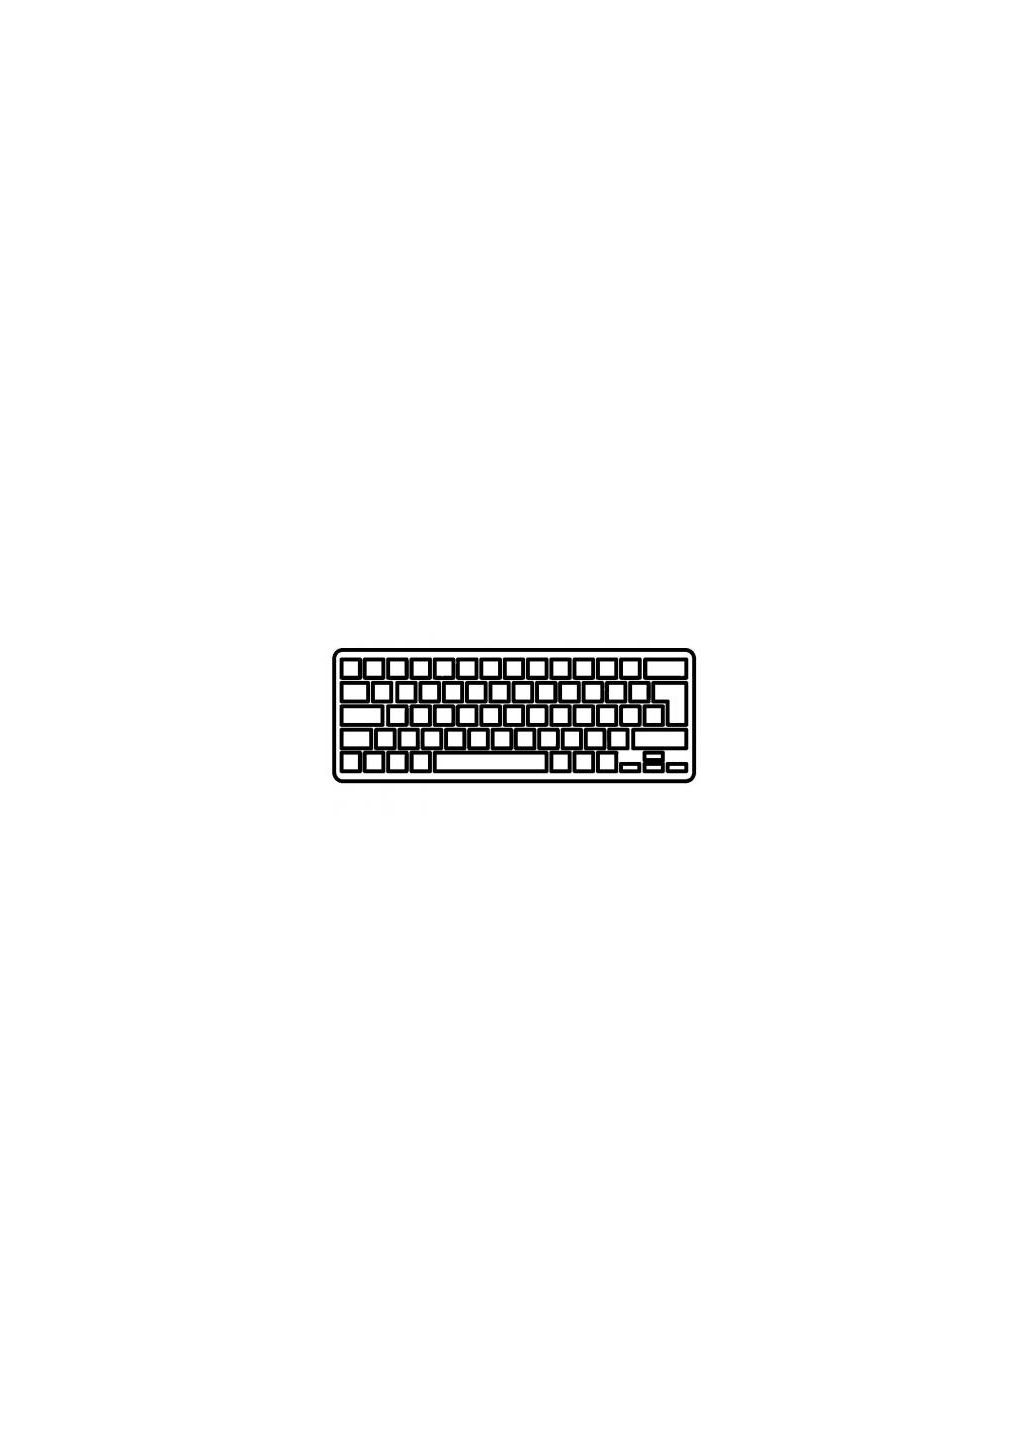 Клавиатура ноутбука атовая RU (A43561) Acer emachines d520/d530/d720/e520/e720 series черная м (276707558)